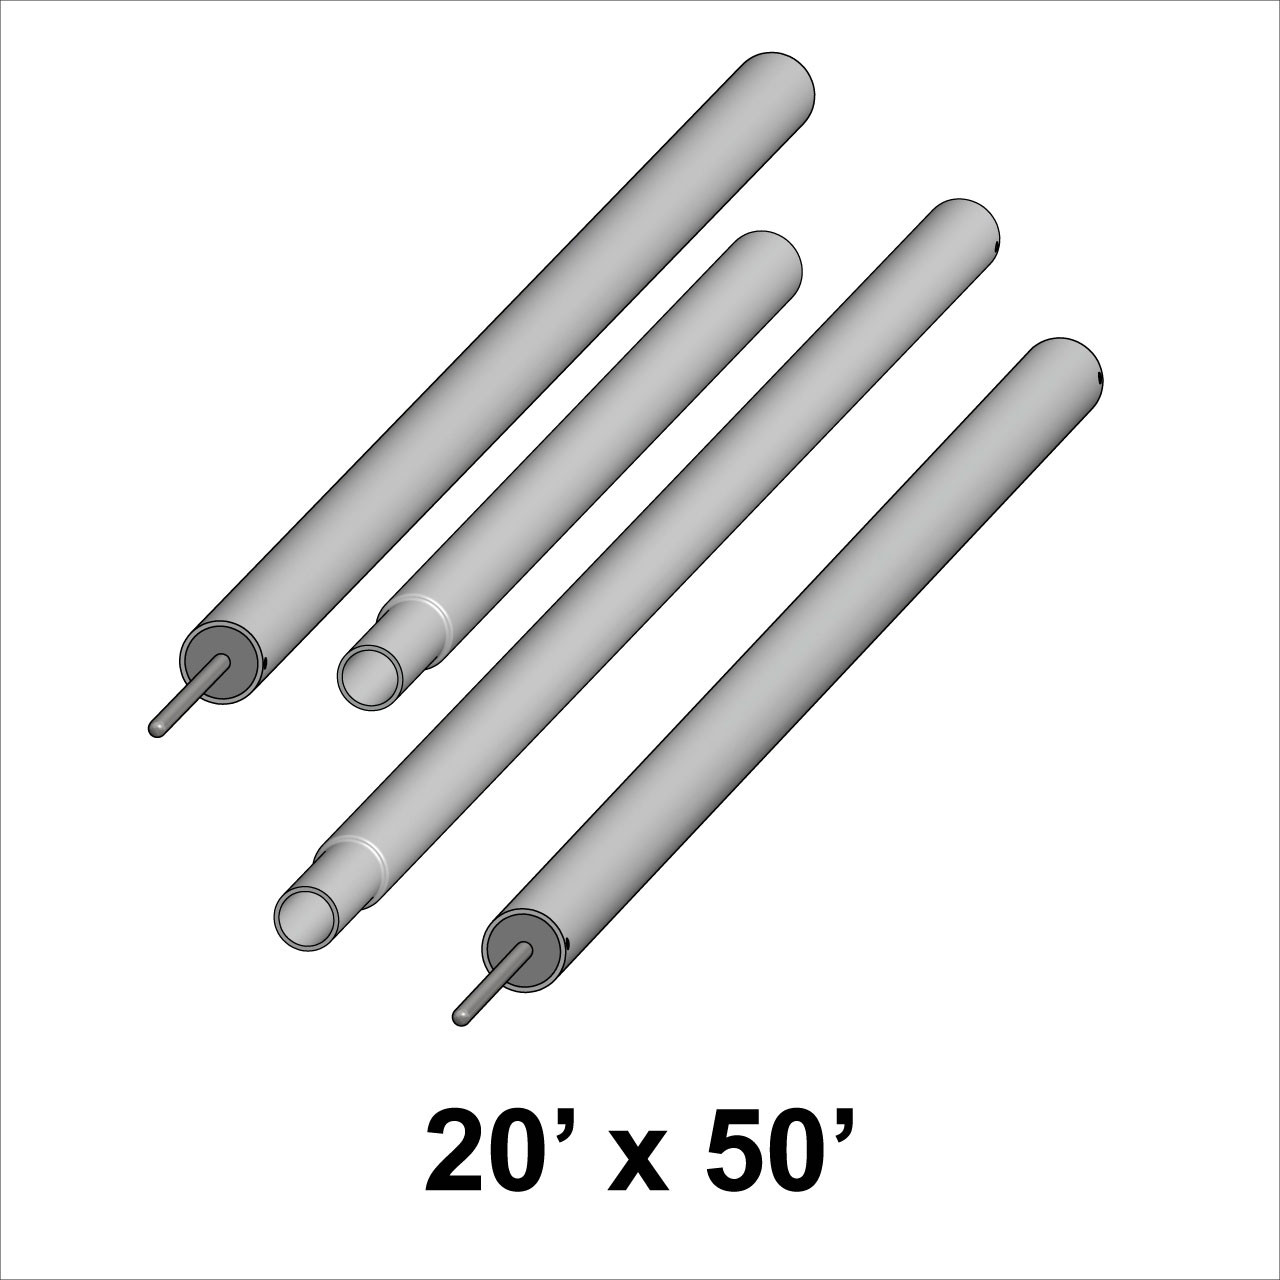 20' x 50' Classic Series Pole Kit